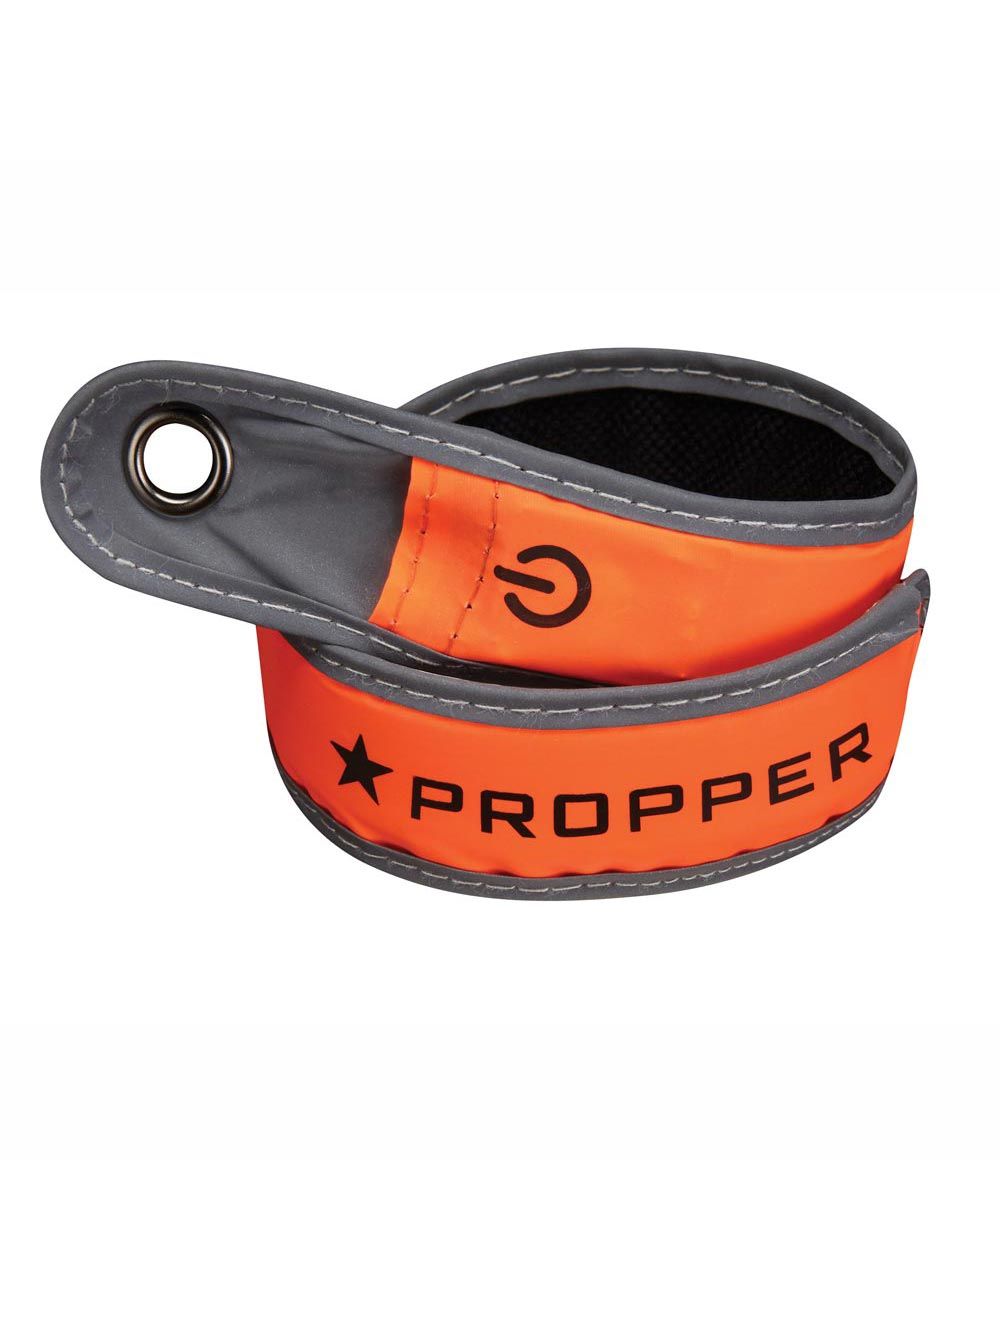 Propper LED Reflective Safety Band